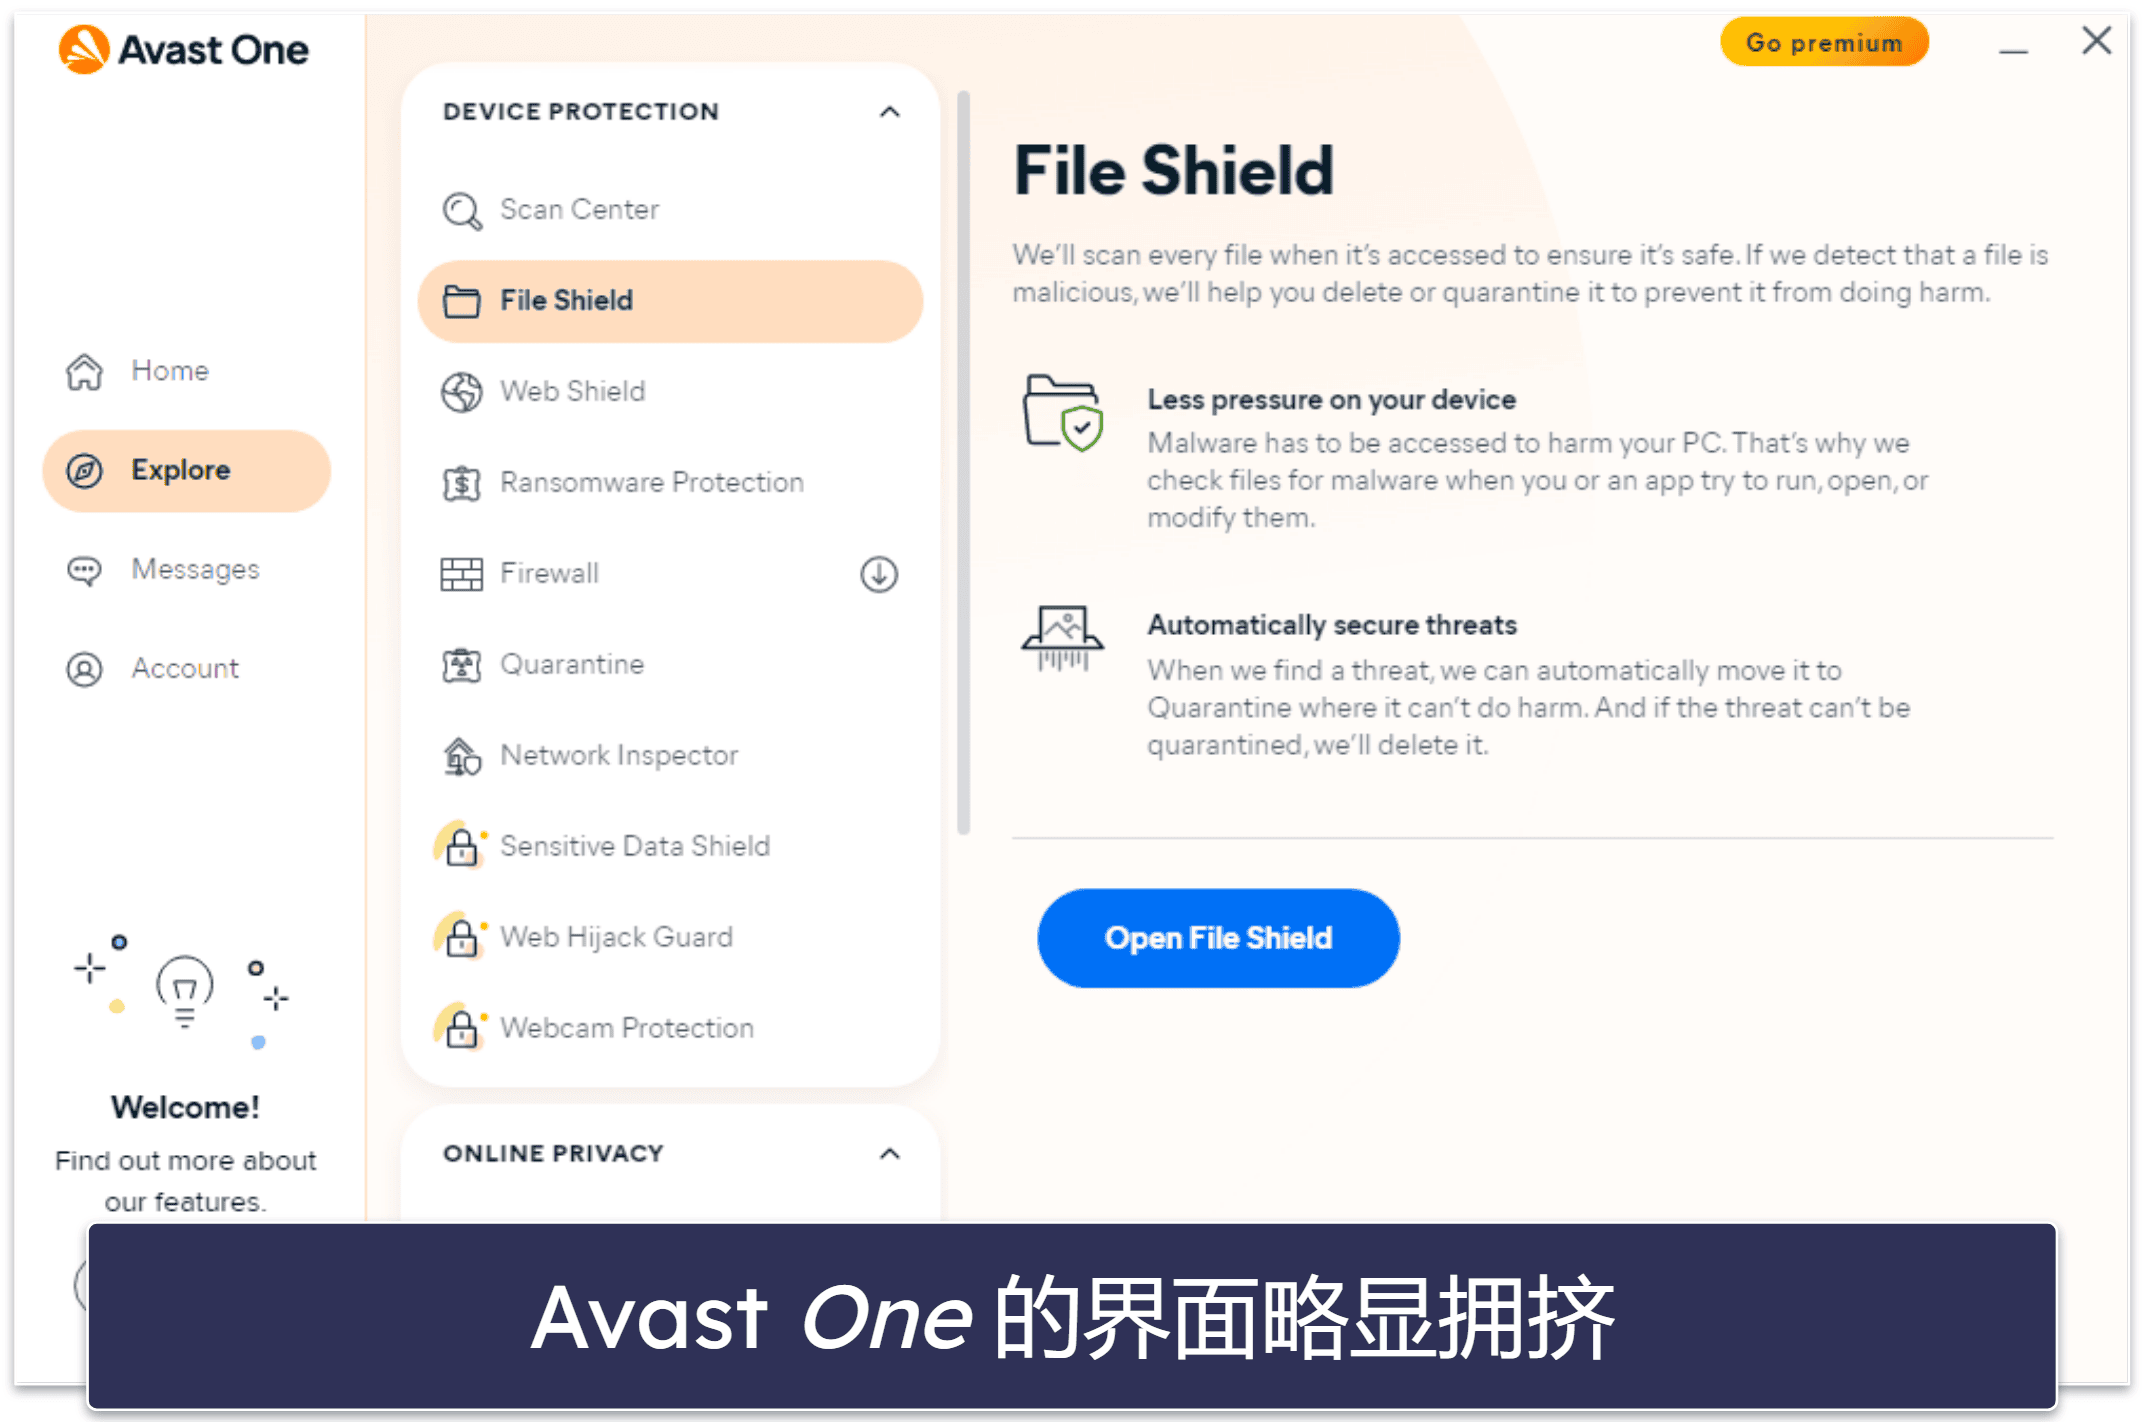 5. Avast One Essential：高效防病毒，优质隐私保护工具